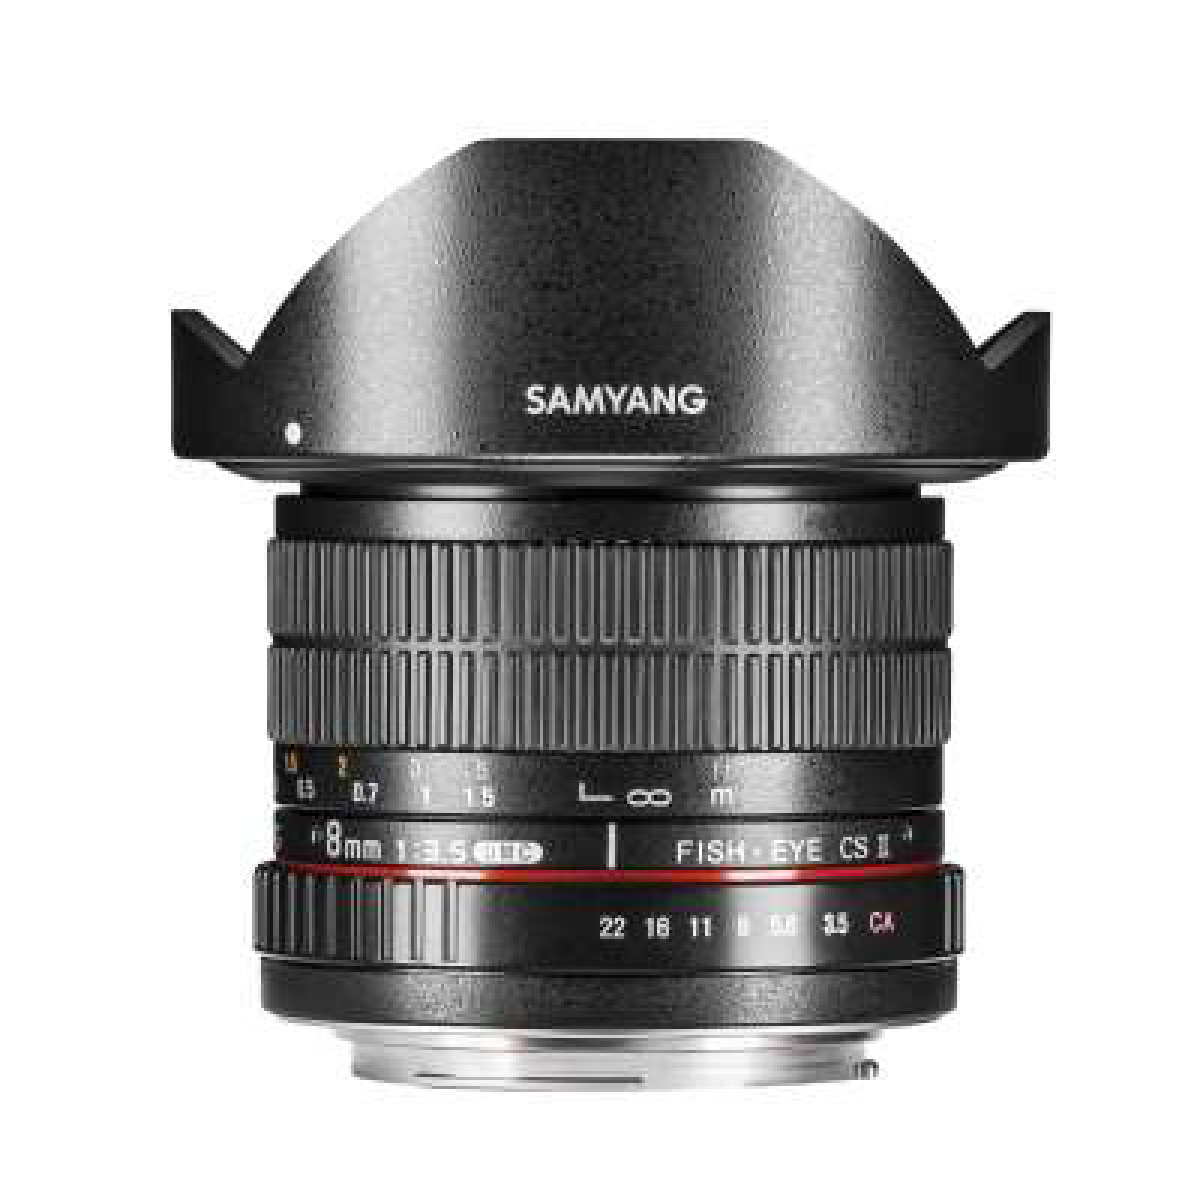 Samyang MF 8 mm 1:3,5 UMC Fisheye CS II für Sony A-Mount